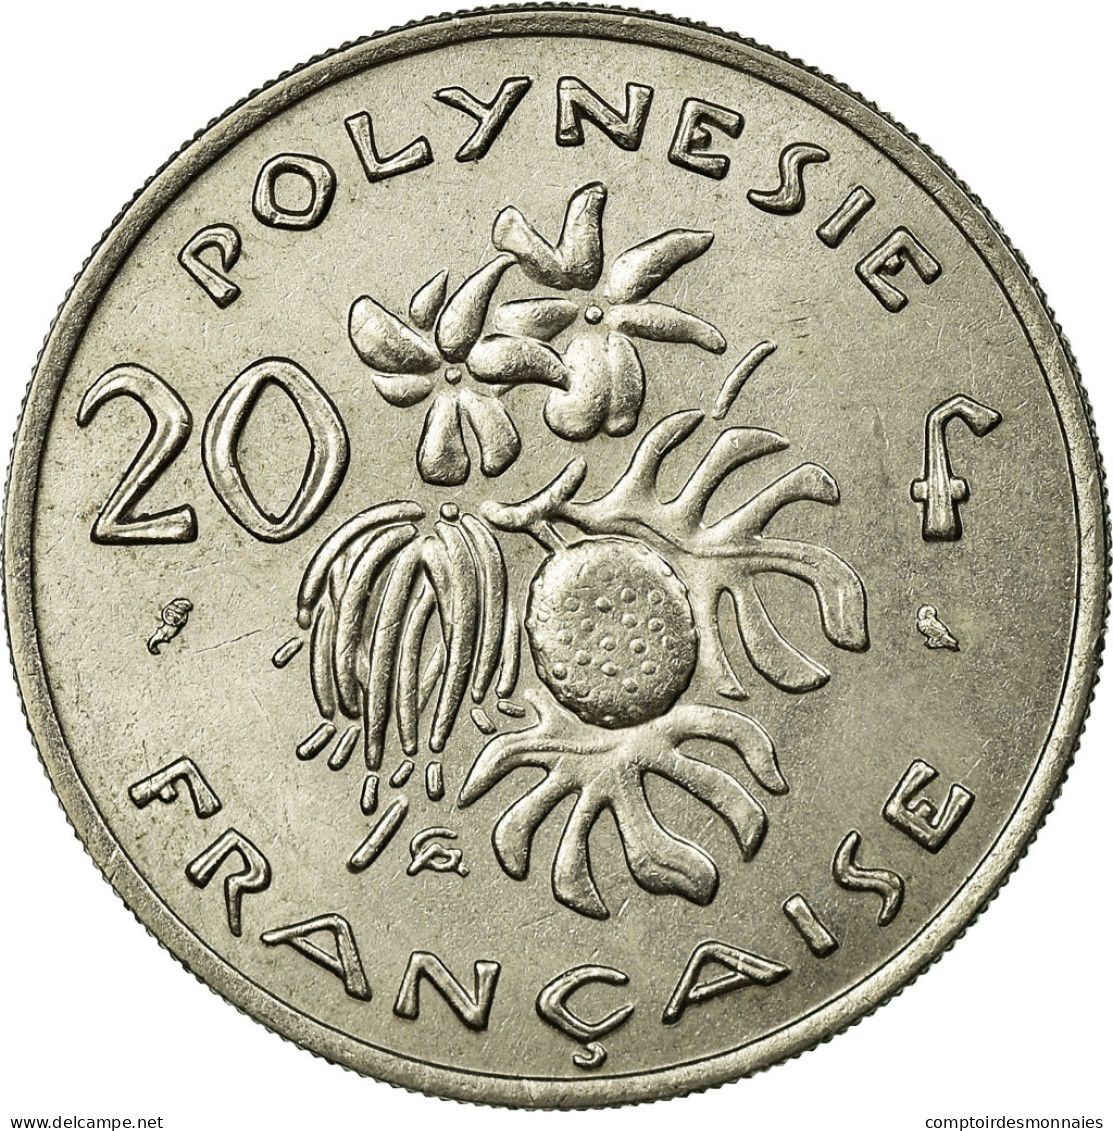 Monnaie, French Polynesia, 20 Francs, 1967, Paris, TTB, Nickel, KM:6 - Polynésie Française